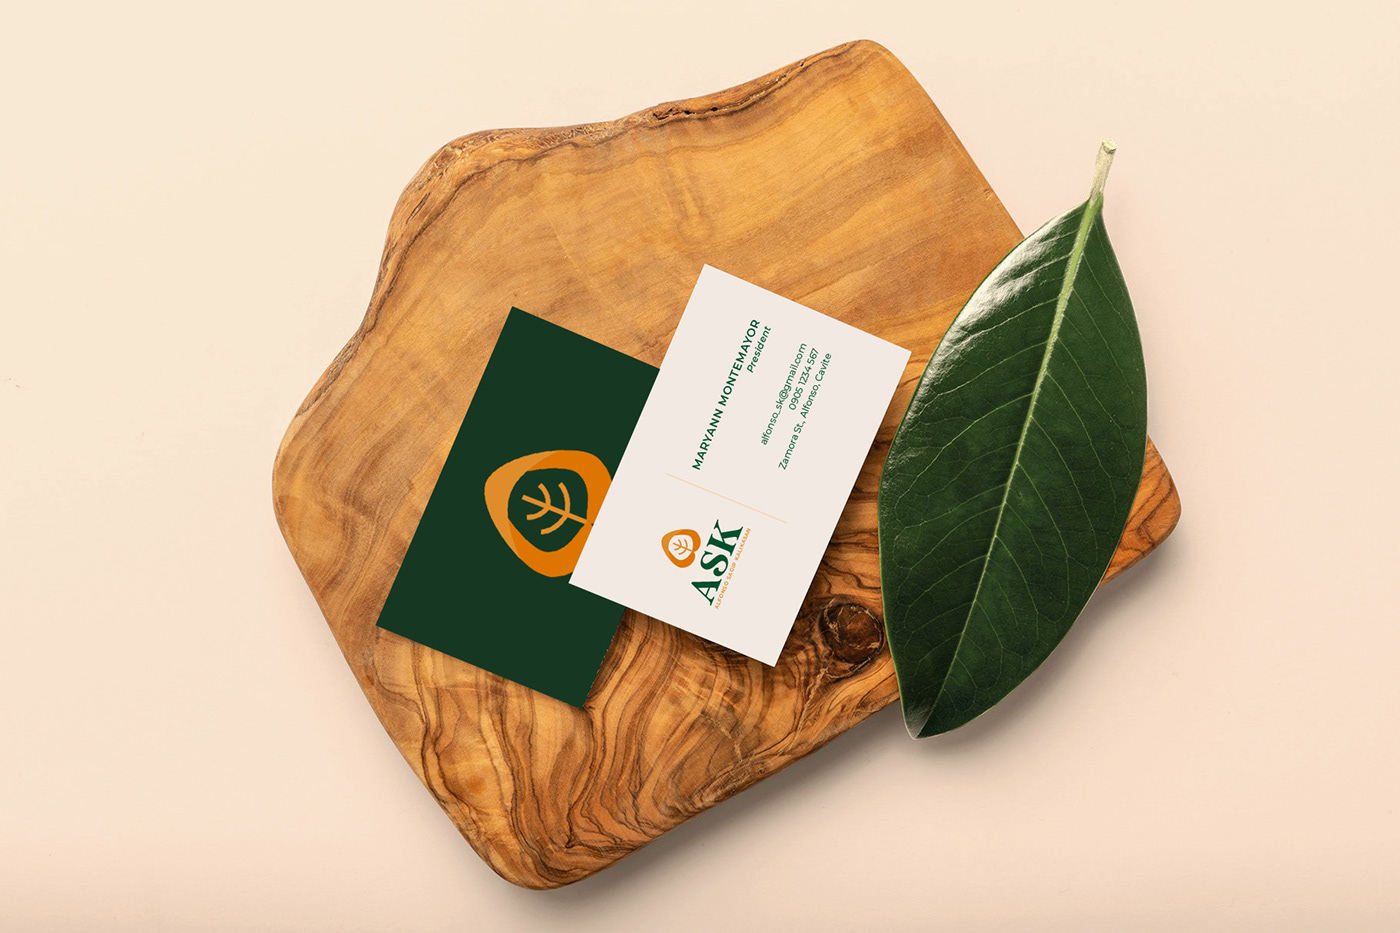 NGO enviroment organization organization branding advocacy Sustainability eco green